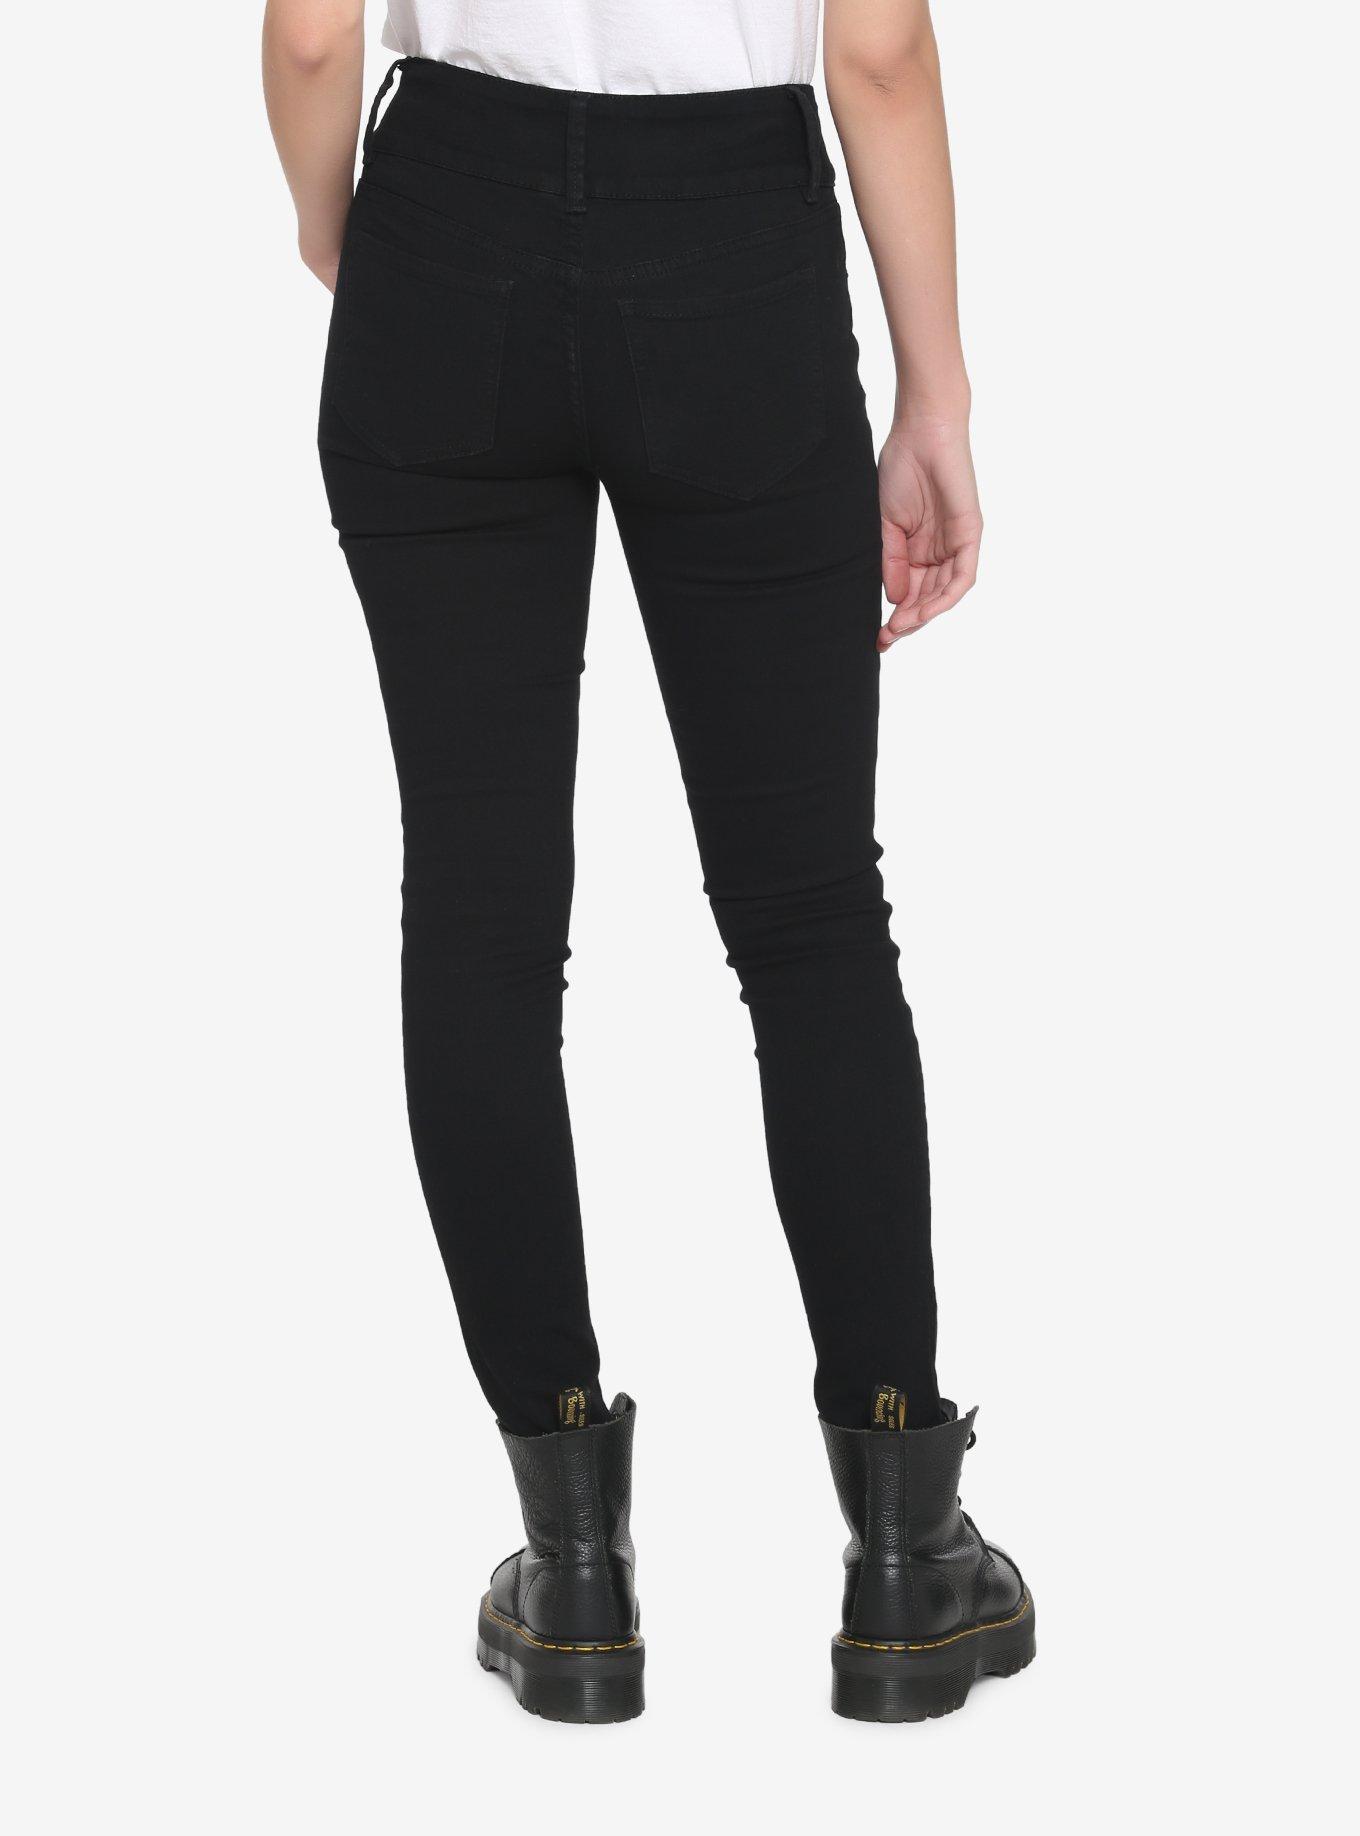 Black 3-Button Skinny Jeans, BLACK, alternate